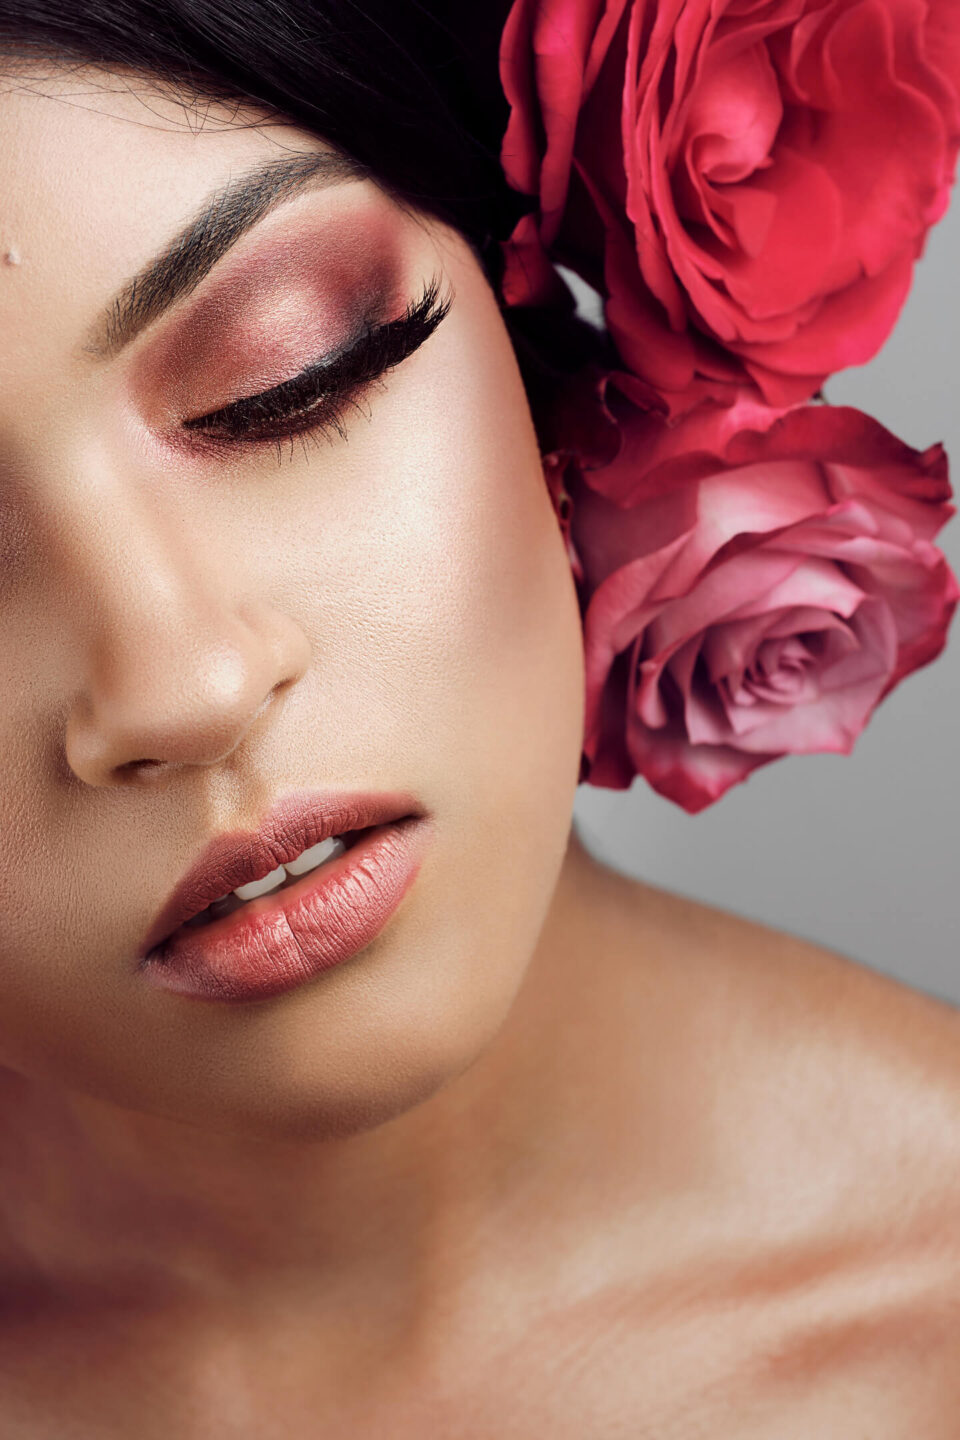 Jahnvi - Preeti, Makeup Artist - Beauty Editorial Portrait Photography - Floral Portrait Photography - Midwood, Brooklyn New York